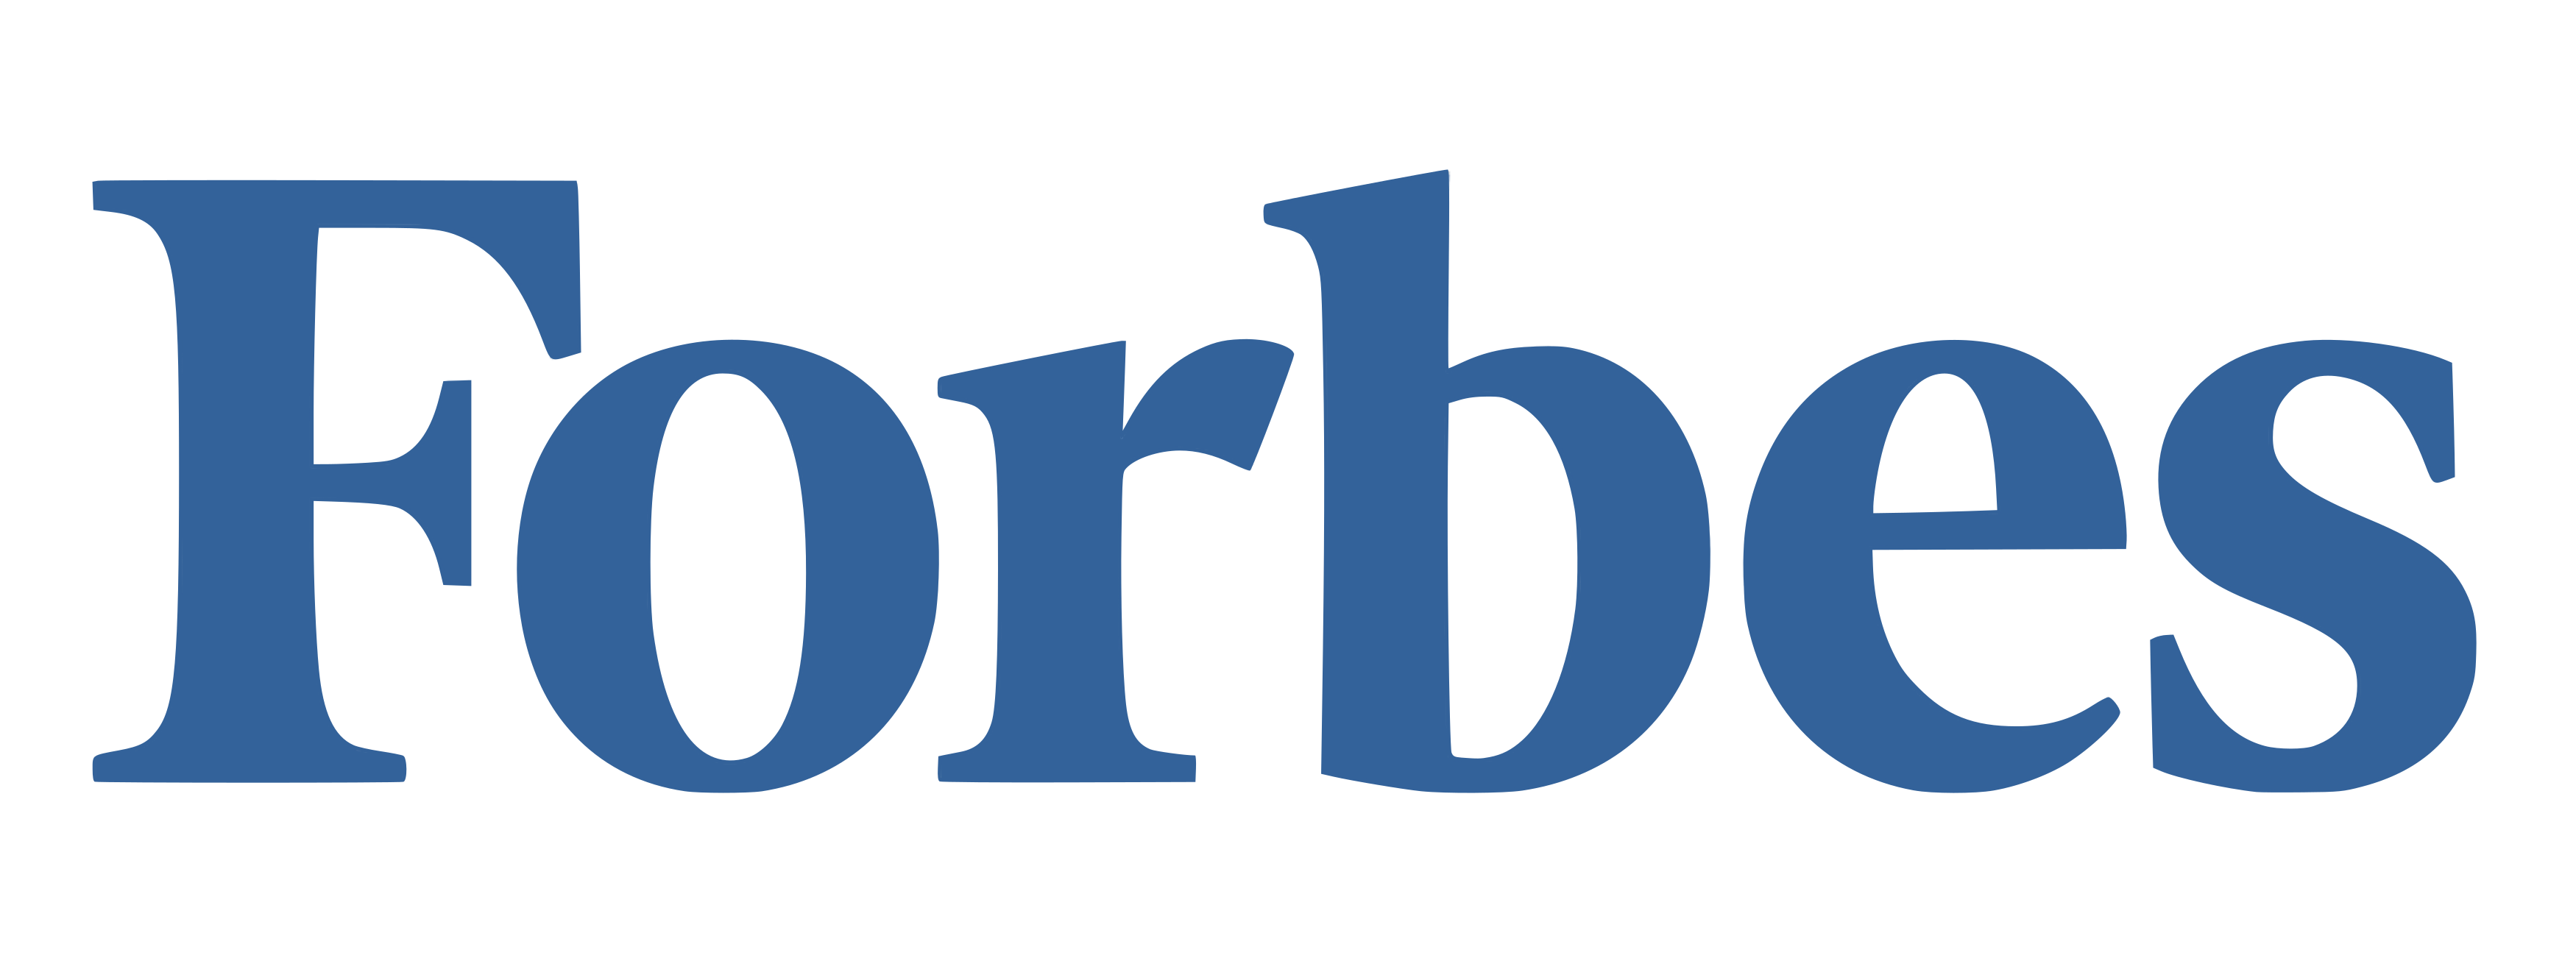 forbes logo - Forbes Logo